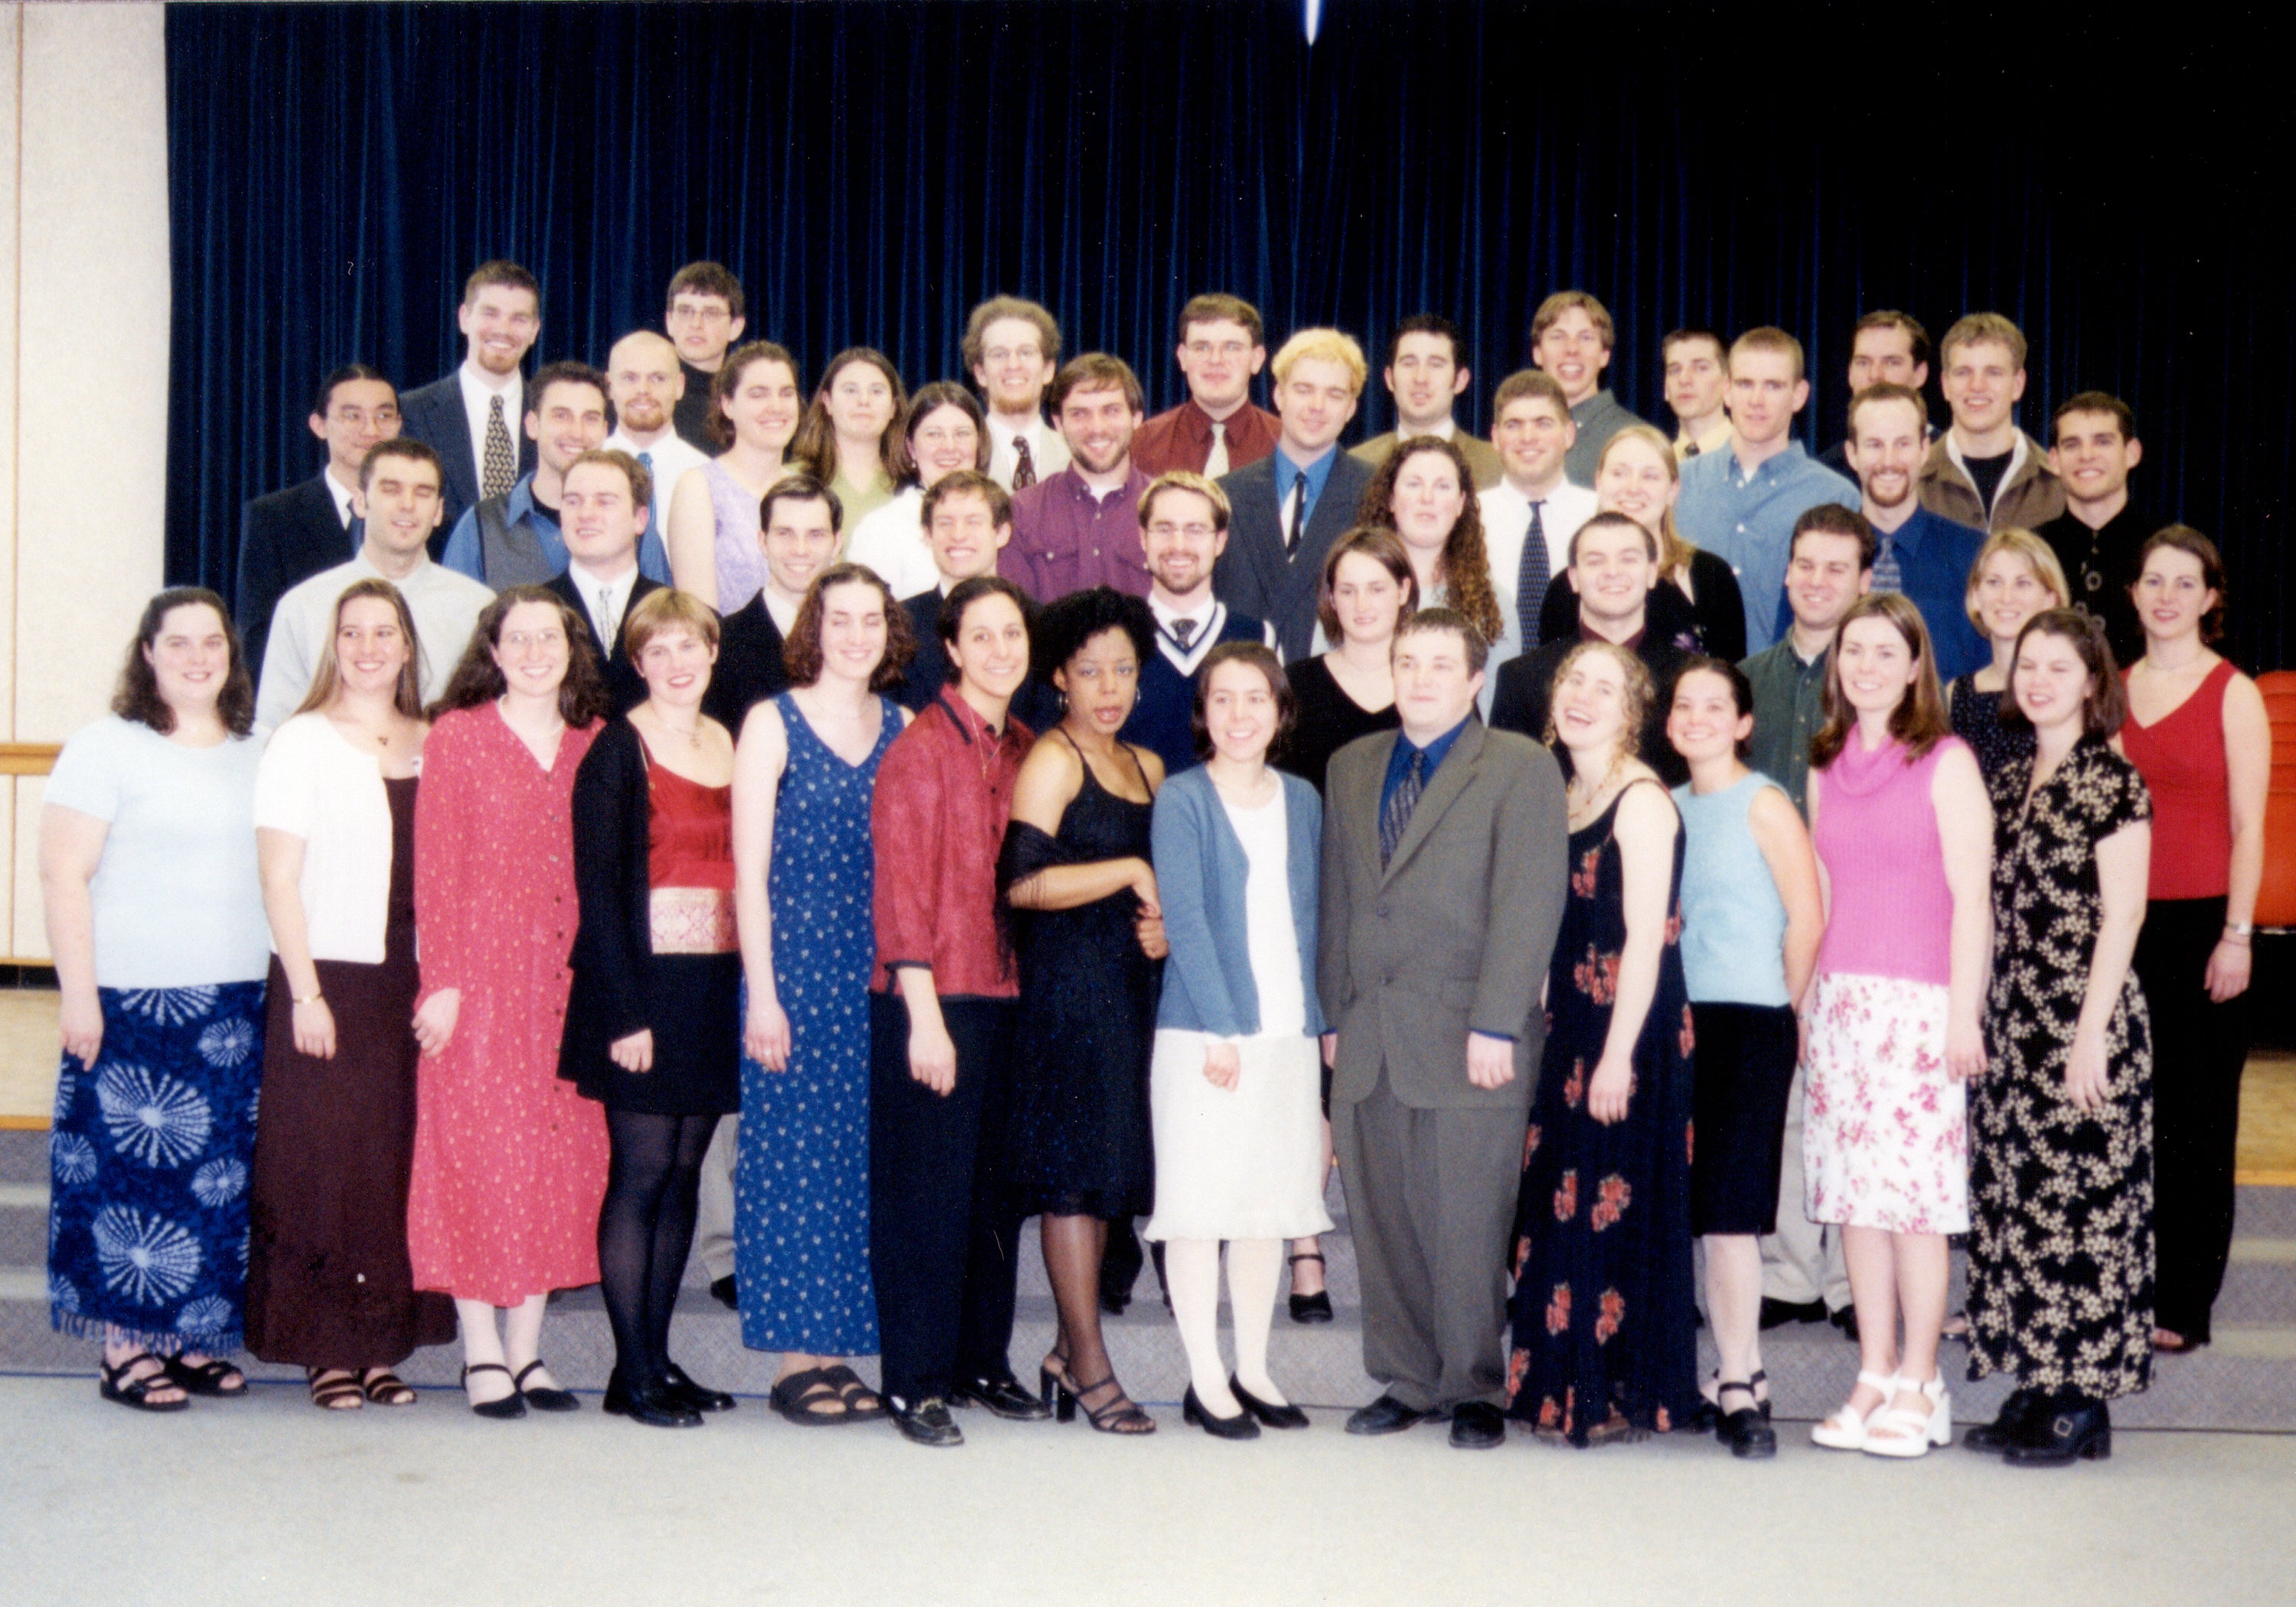 Graduating Class of 2001